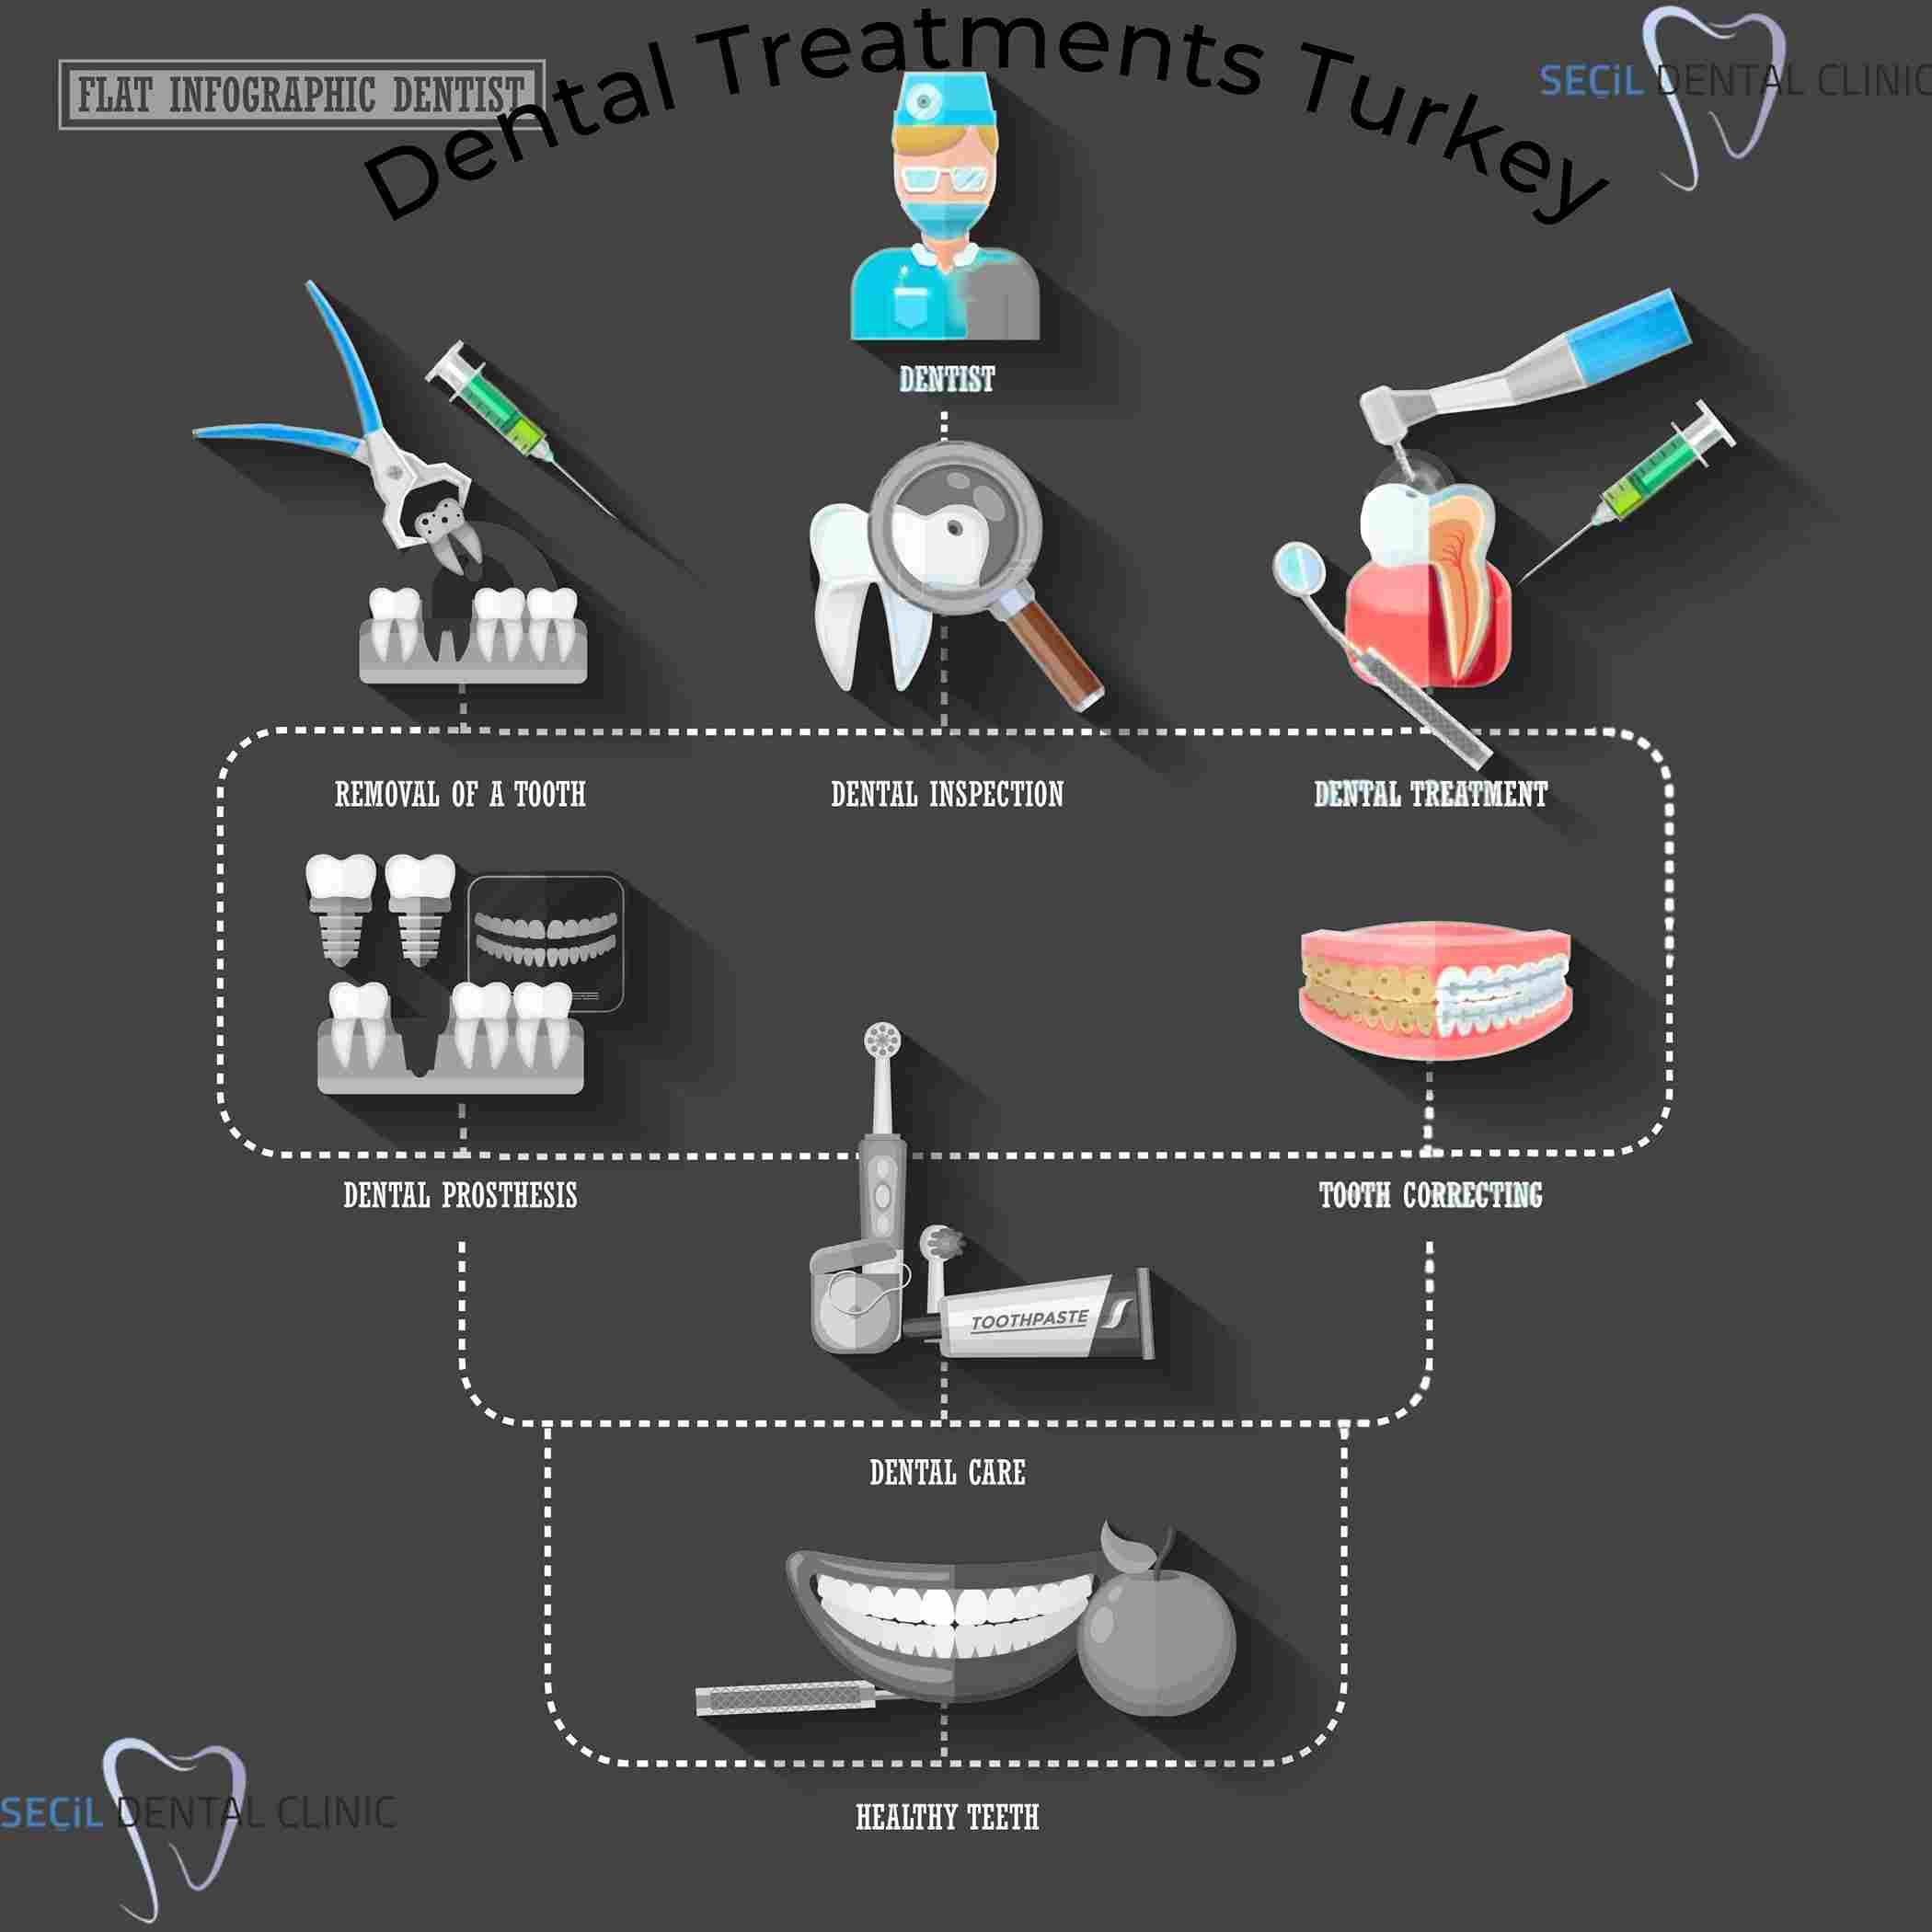 Dental Treatments in Turkey